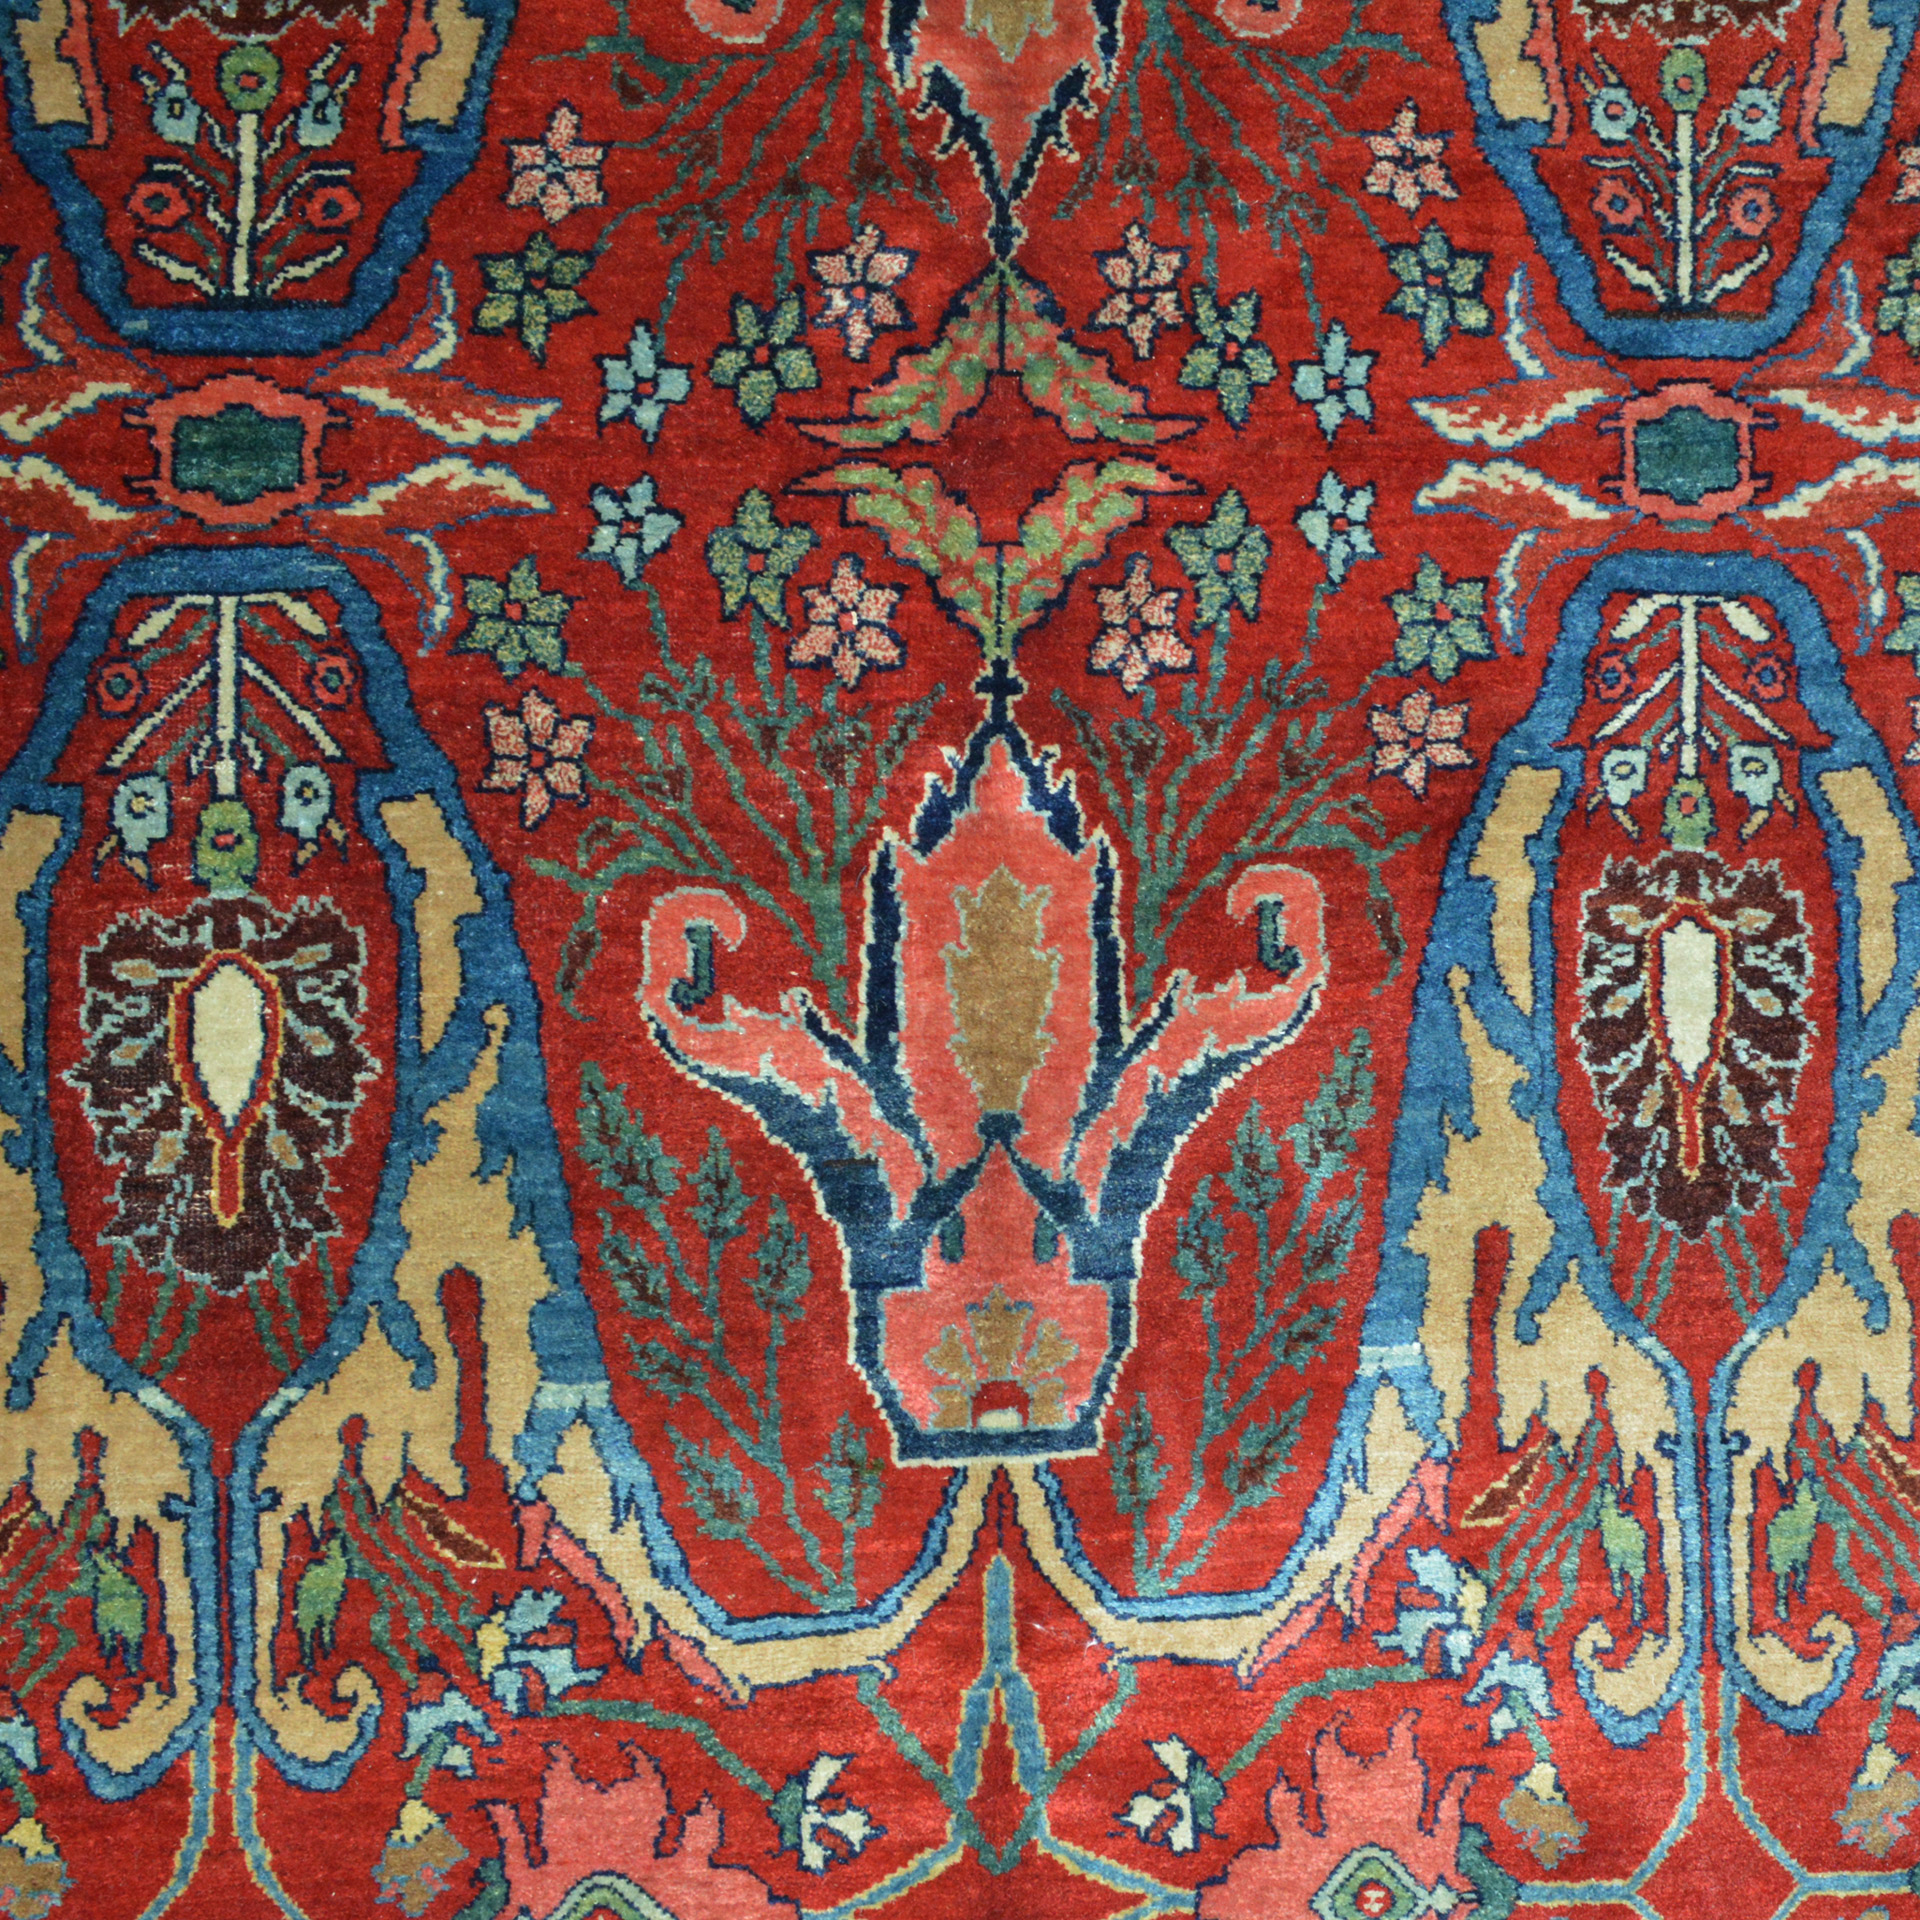 Calyx design field detail in an antique Persian Bidjar carpet